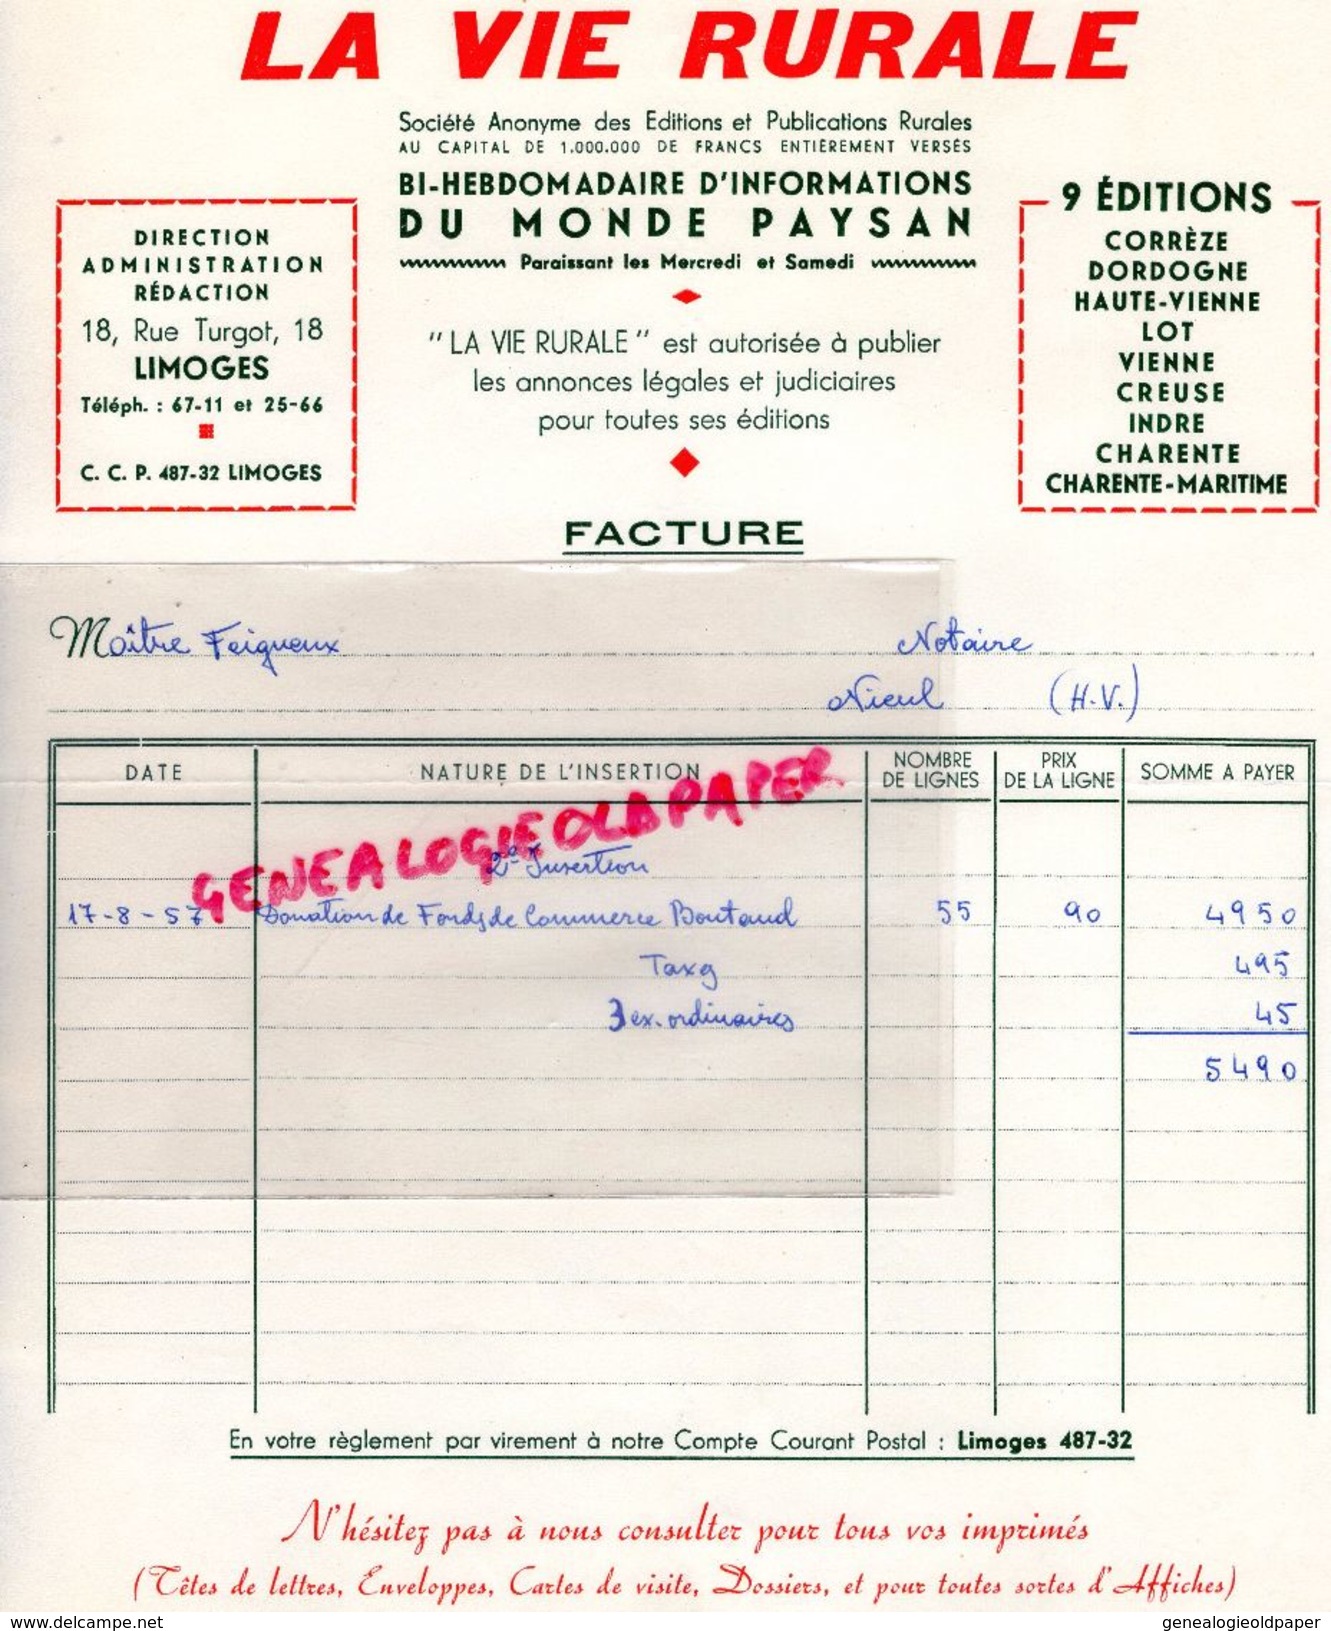 87 - LIMOGES - FACTURE LA VIE RURALE DU MONDE PAYSAN- PRESSE JOURNAL -18 RUE TURGOT- 1957 - Printing & Stationeries